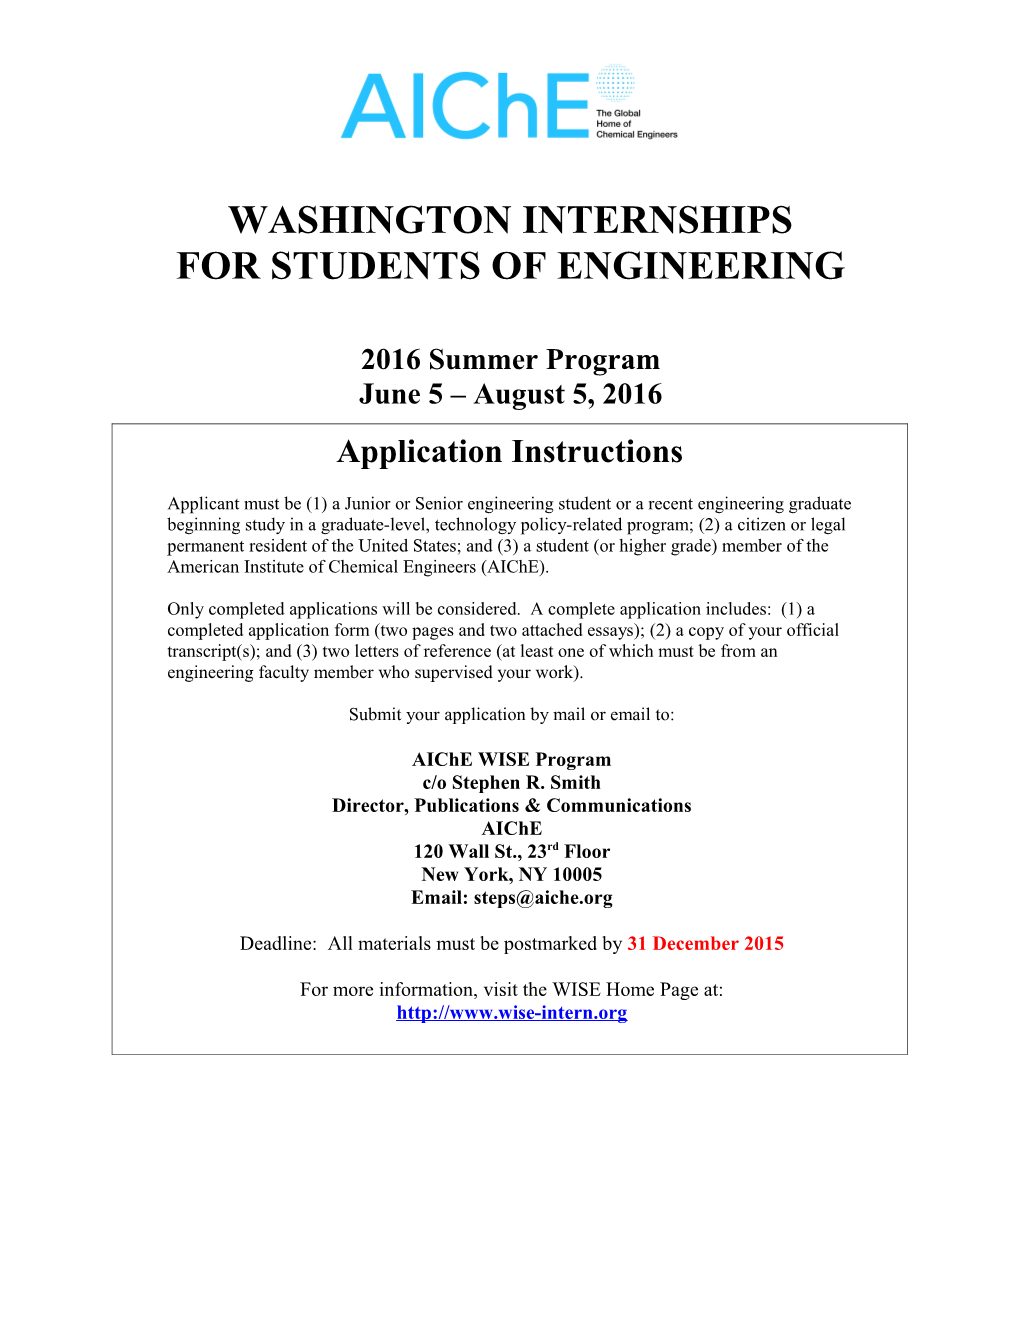 Washington Internships for Students of Engineering